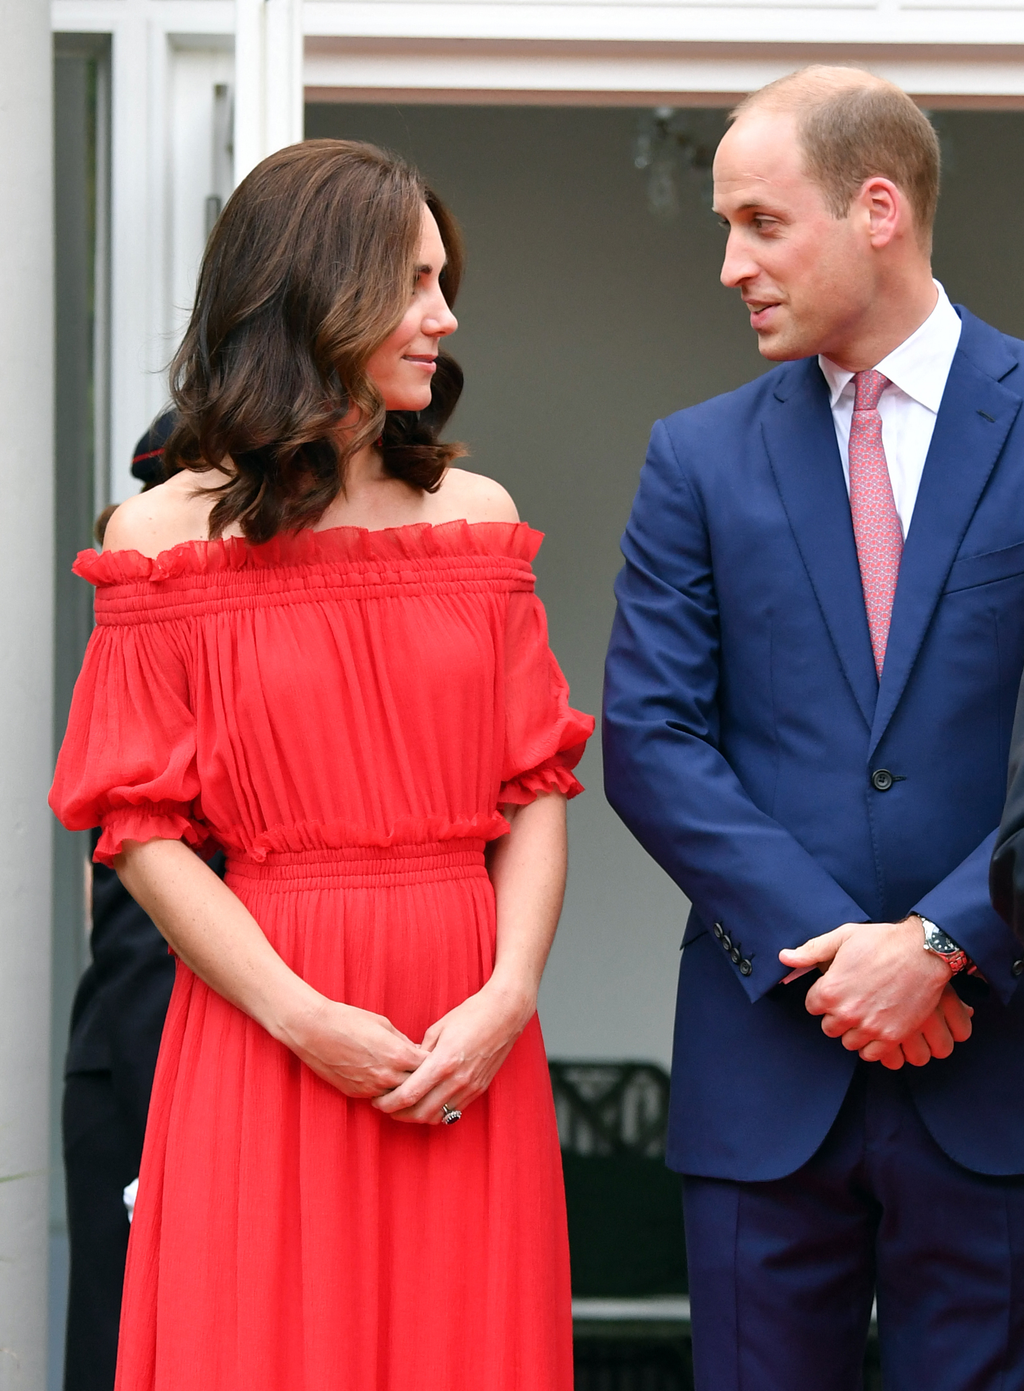 Katalin hercegné legdrágább ruhái 2021 Vertical ROYAL FAMILY COUPLE PRINCE PRINCESS AMERICAN SHOT RED CLOTHING VISIT OFFICIAL VISIT DIPLOMACY 